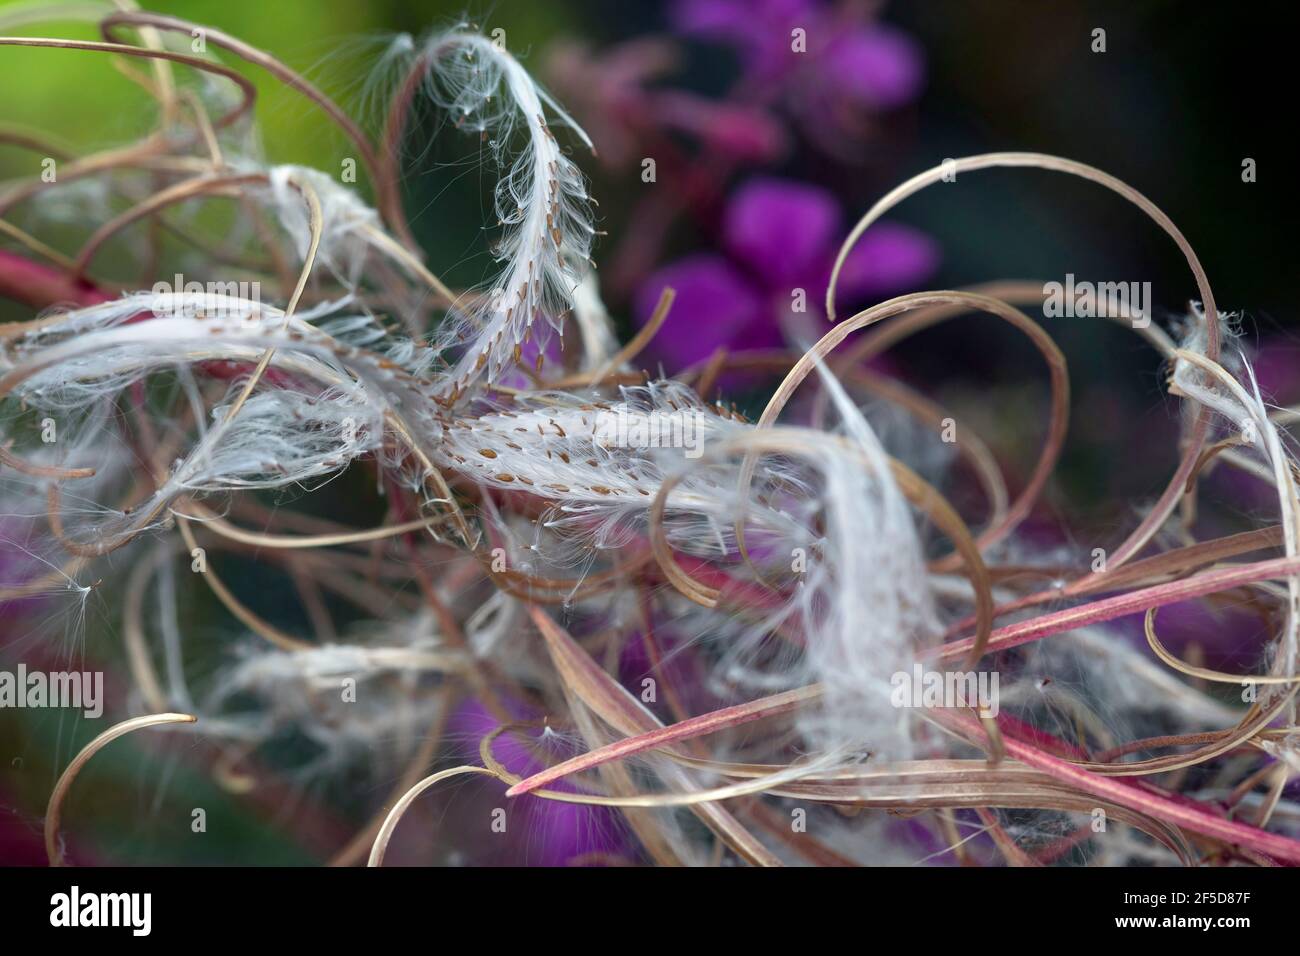 Fireweed, sally en fleurs, feuilles de saule de Rosebay, grandes feuilles de saule (Epilobium angustifolium, Chamerion angustifolium), fruits et graines, Allemagne Banque D'Images